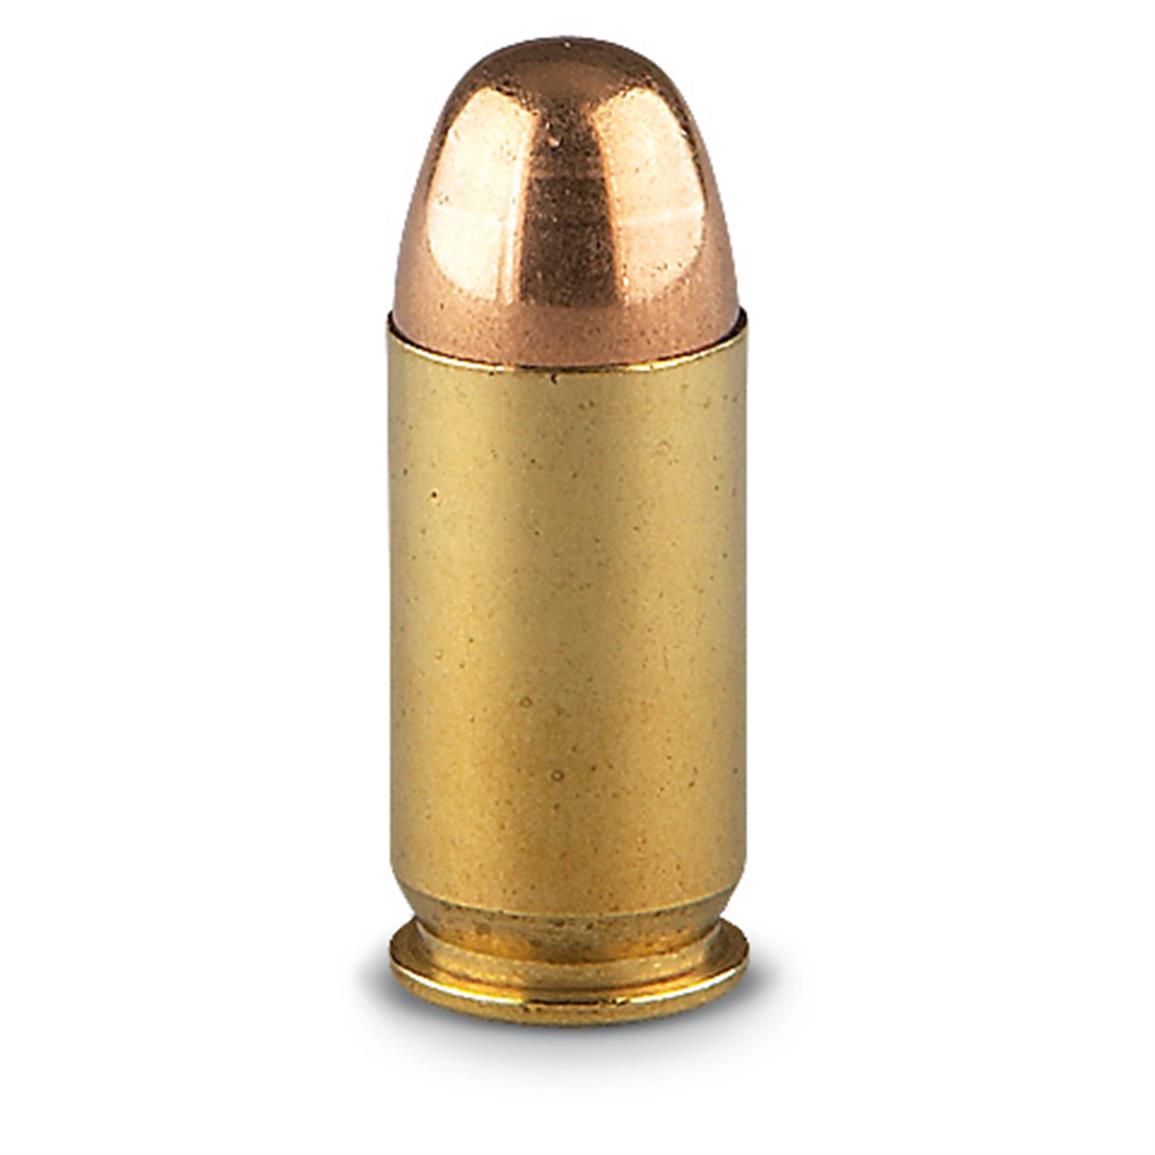 SinterFire Bullets 45 Cal (451 Diameter) 155 Grain Frangible Reduced